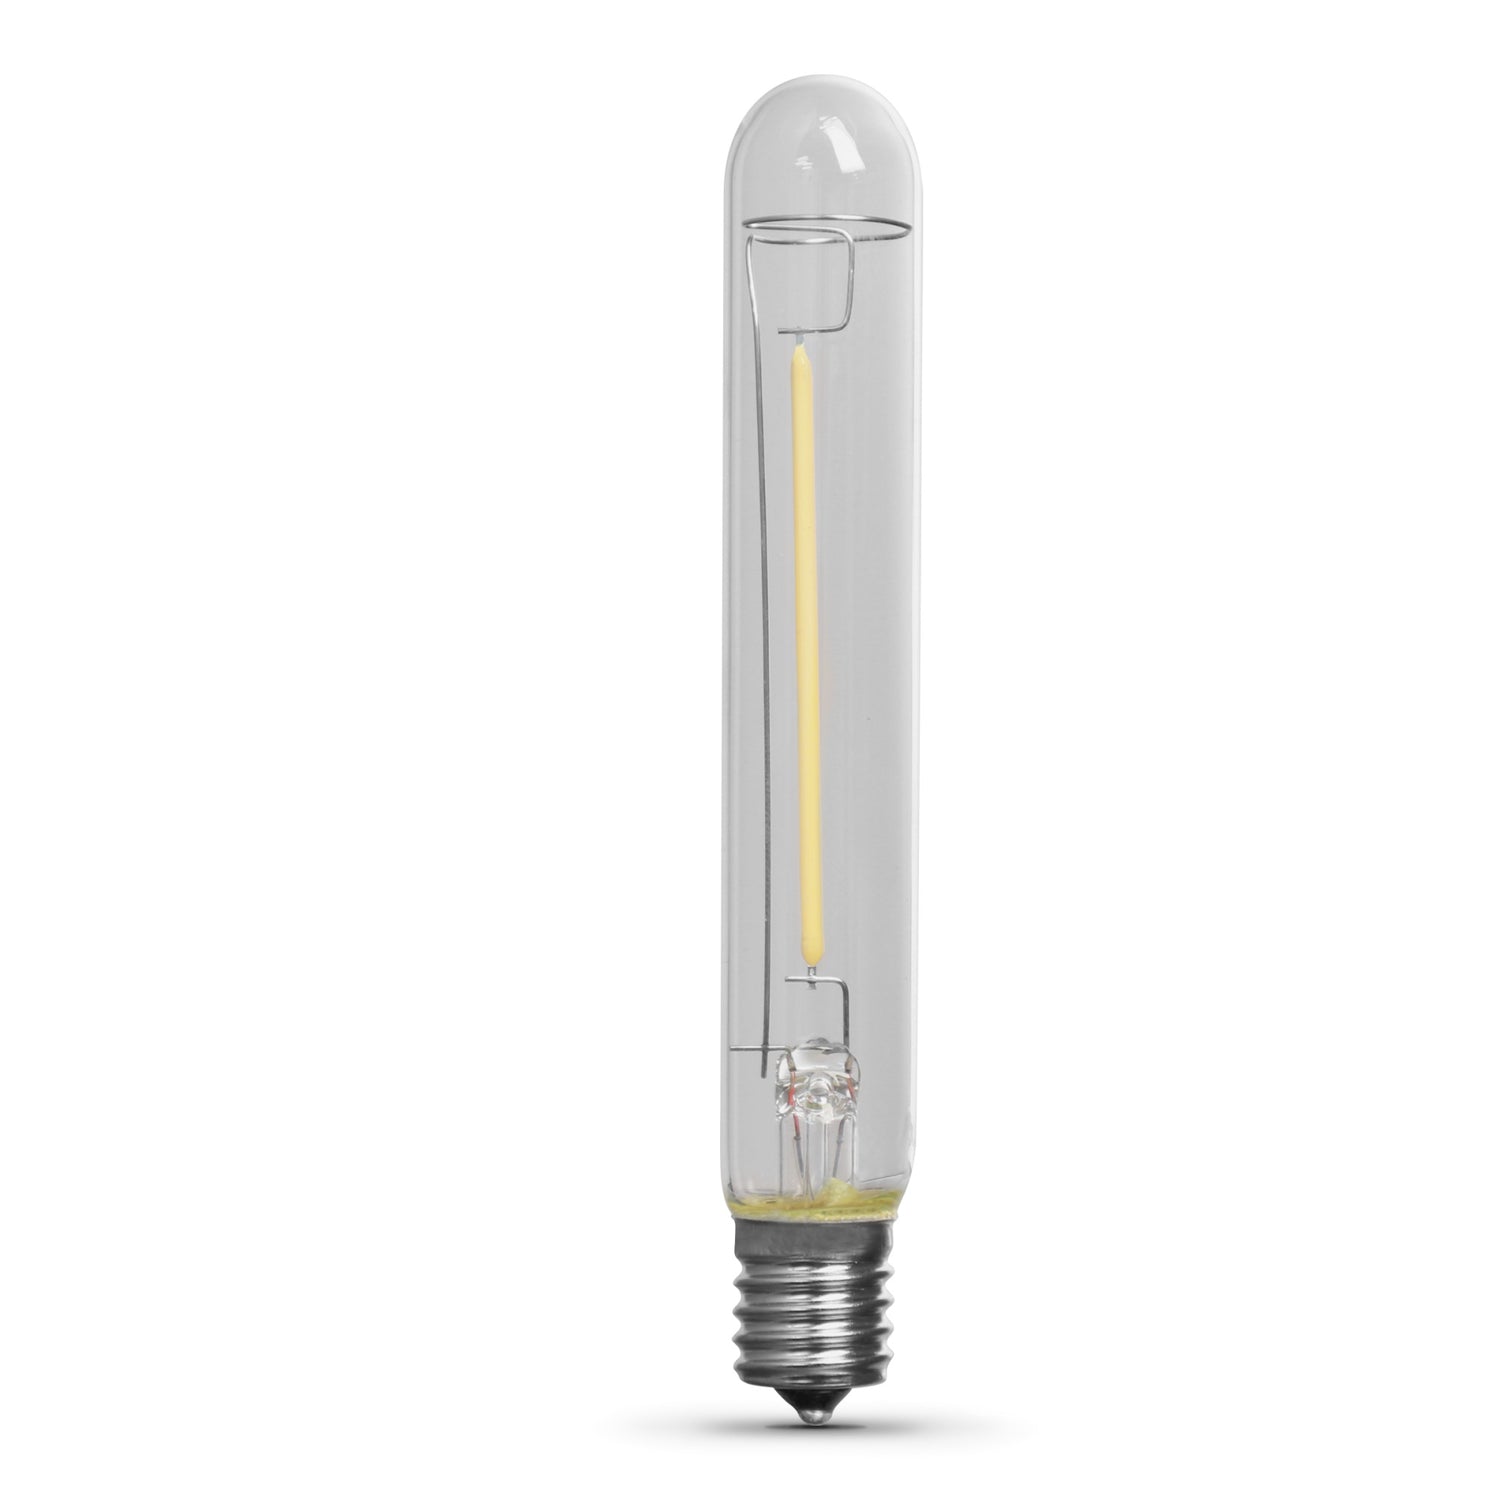 20W Replacement Bright White T 6 1/2 Intermediate E17 Base Appliance LED